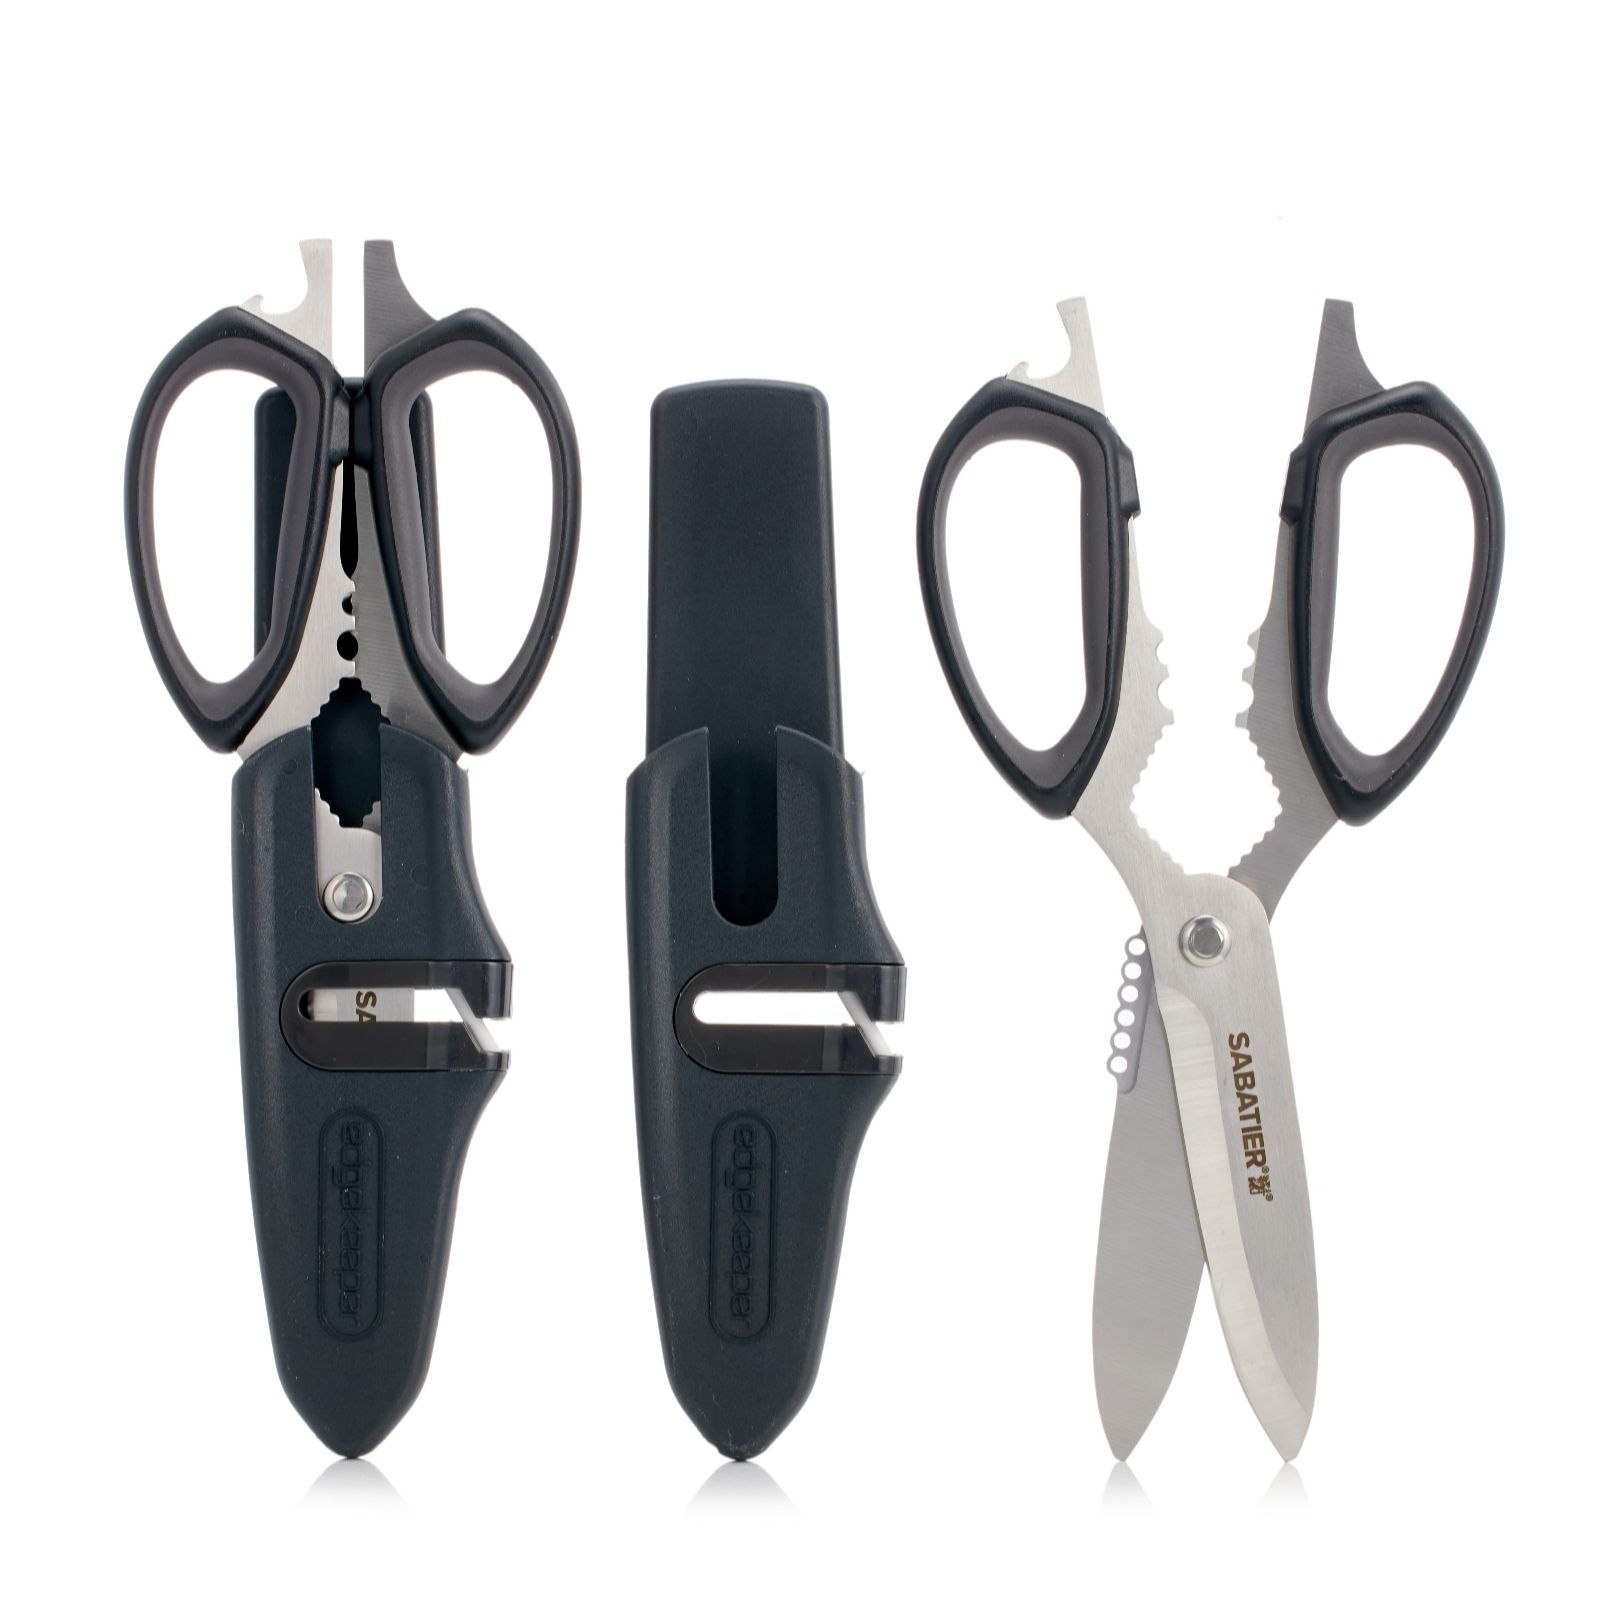 Multipurpose scissors, stainless steel, 23cm, Black - KitchenAid